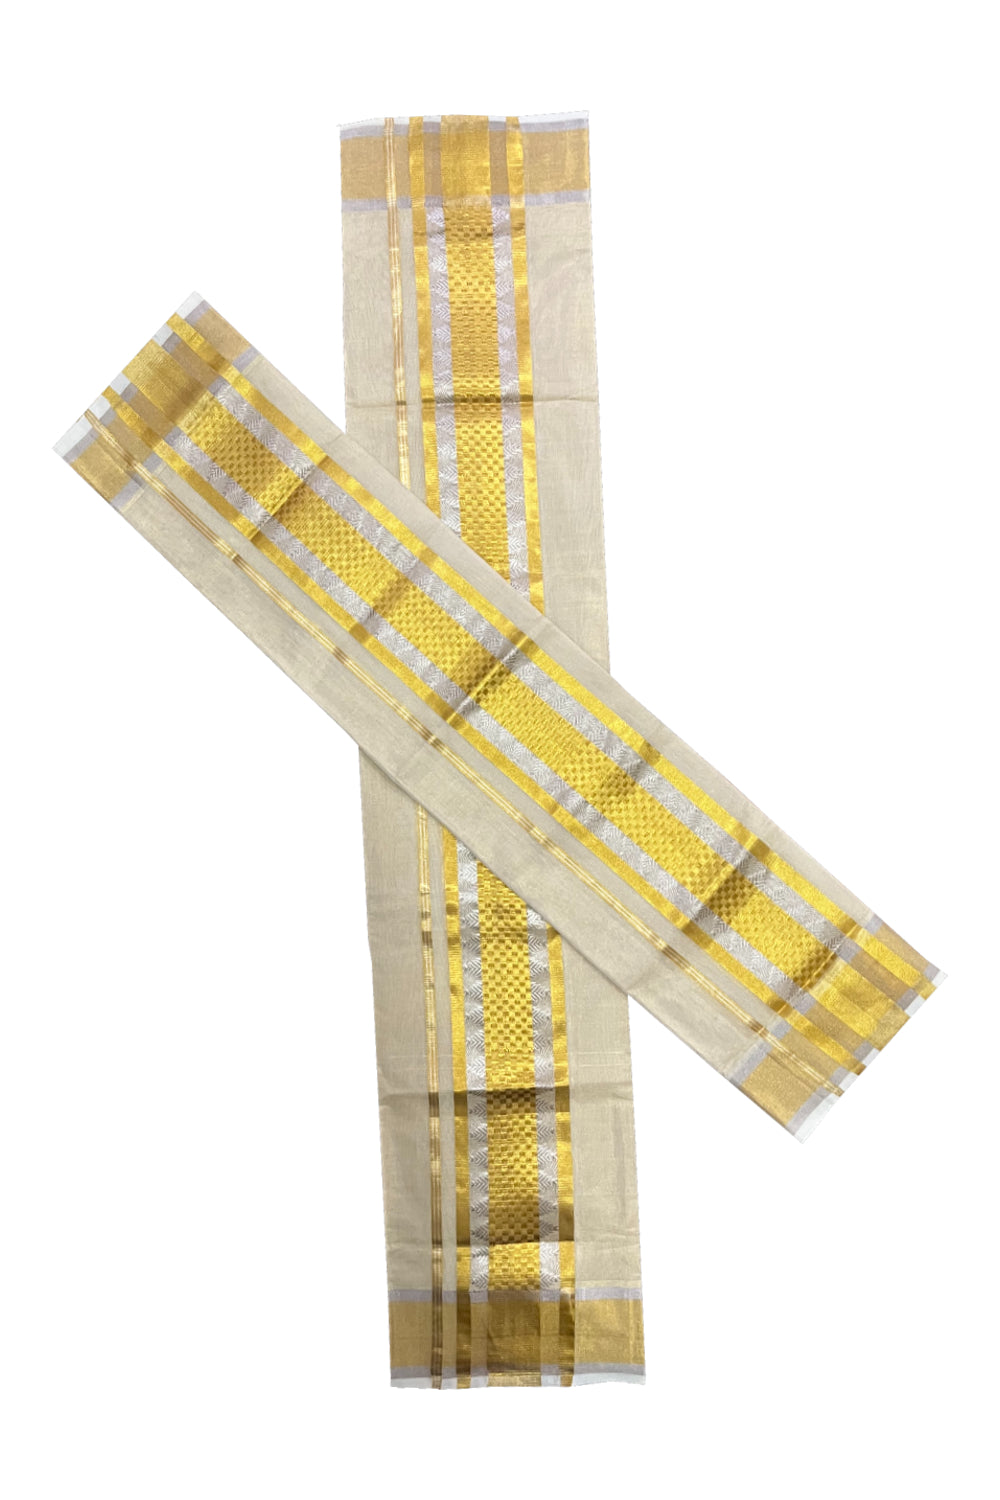 Southloom Premium Handloom Tissue Single Set Mundu with Silver and Golden Kasavu Woven Design Border